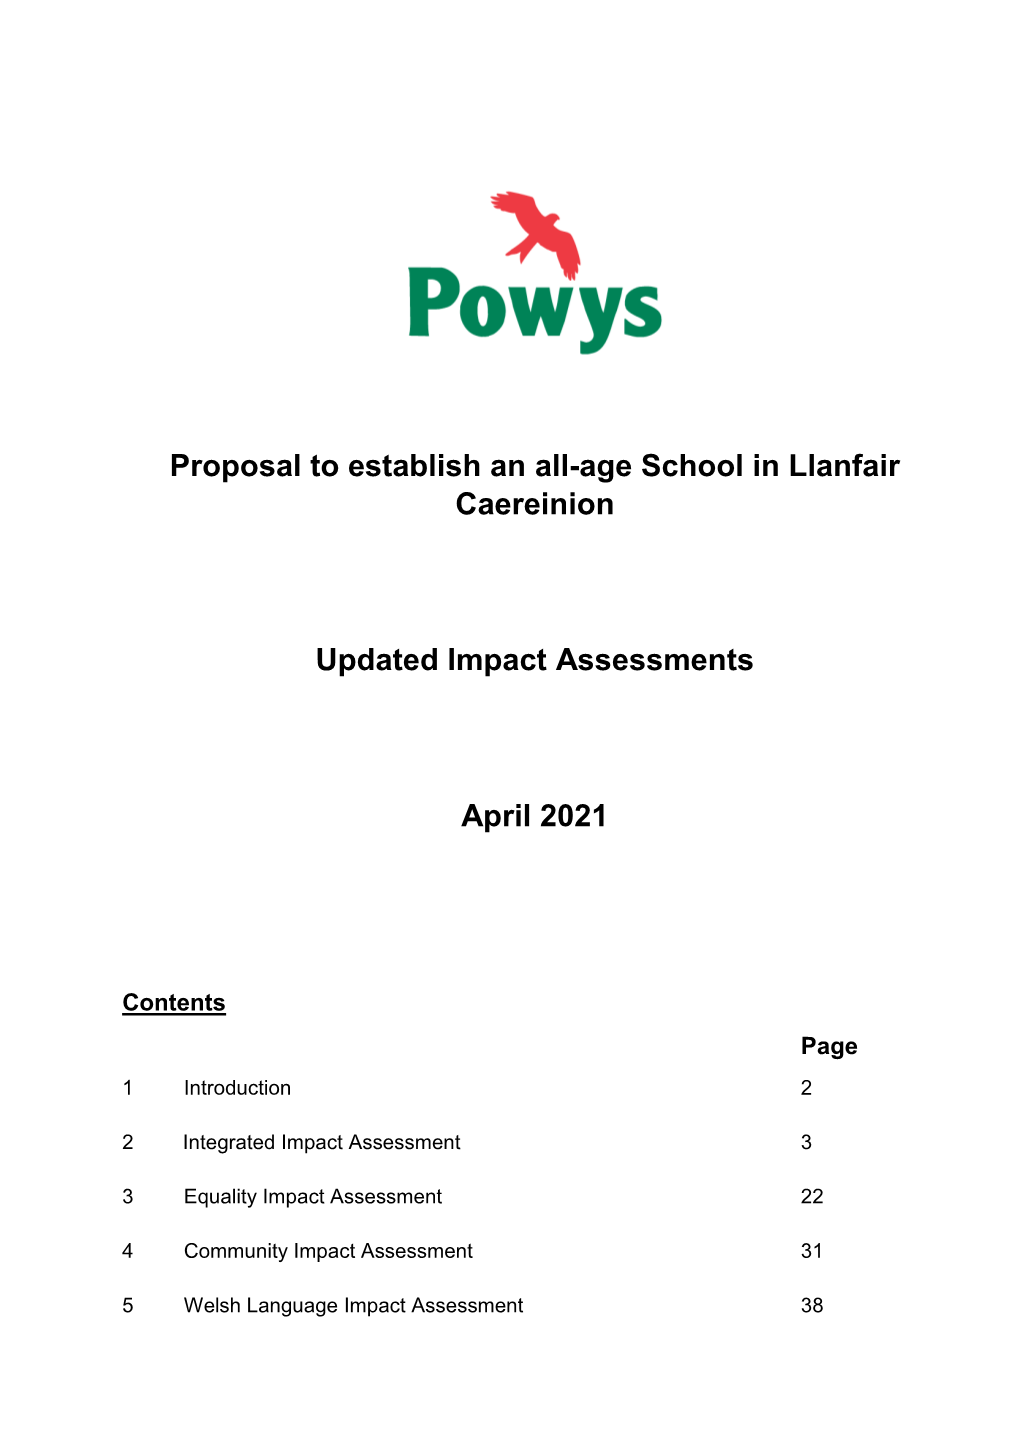 Proposal to Establish an All-Age School in Llanfair Caereinion